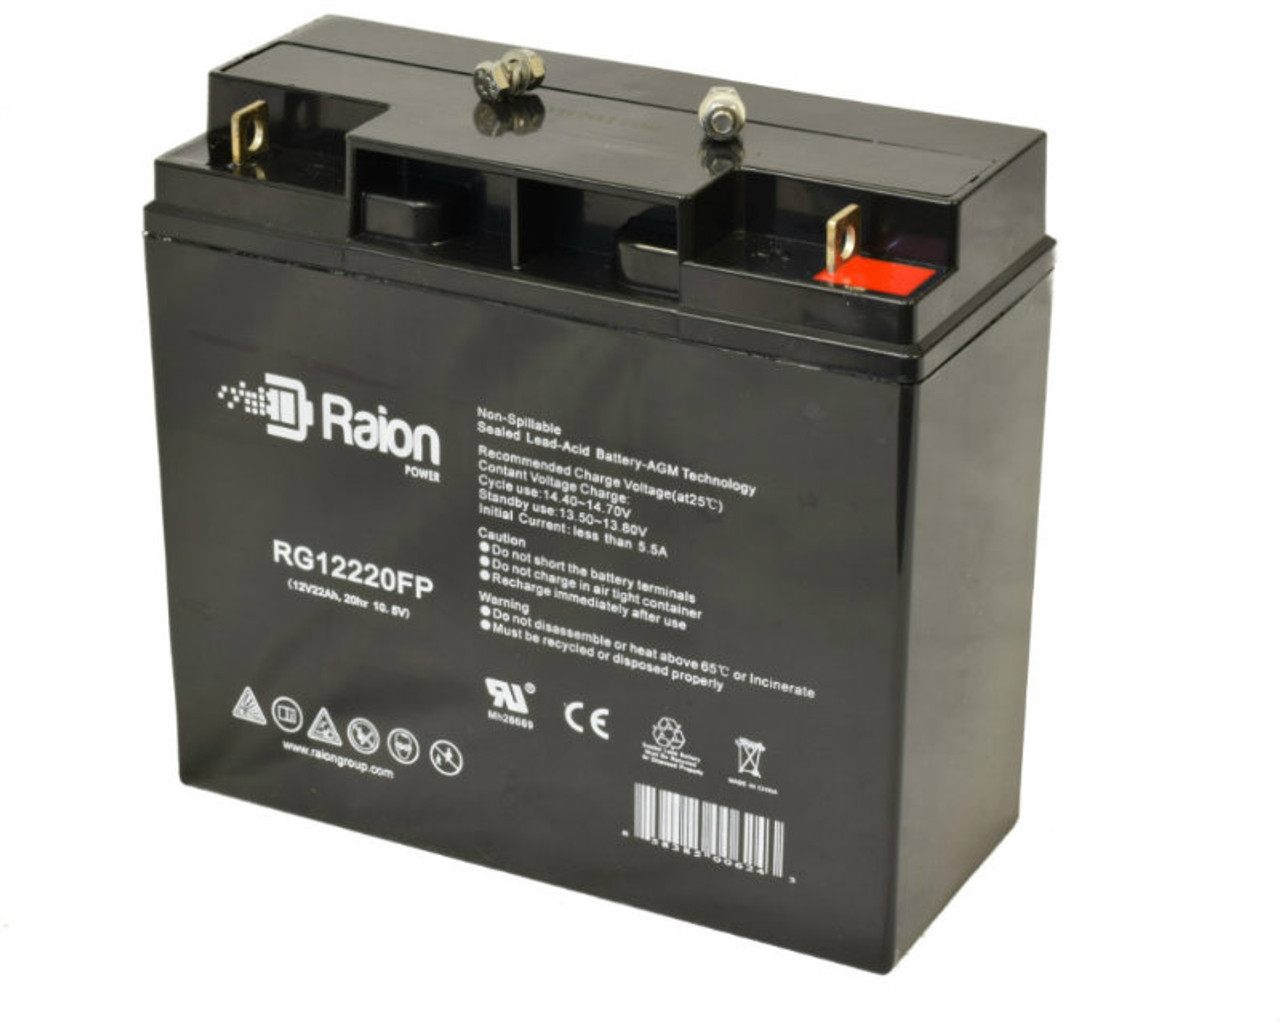 Raion Power RG12220FP 12V 22Ah Lead Acid Battery for Schumacher DSR 5799000010 Jump Starter